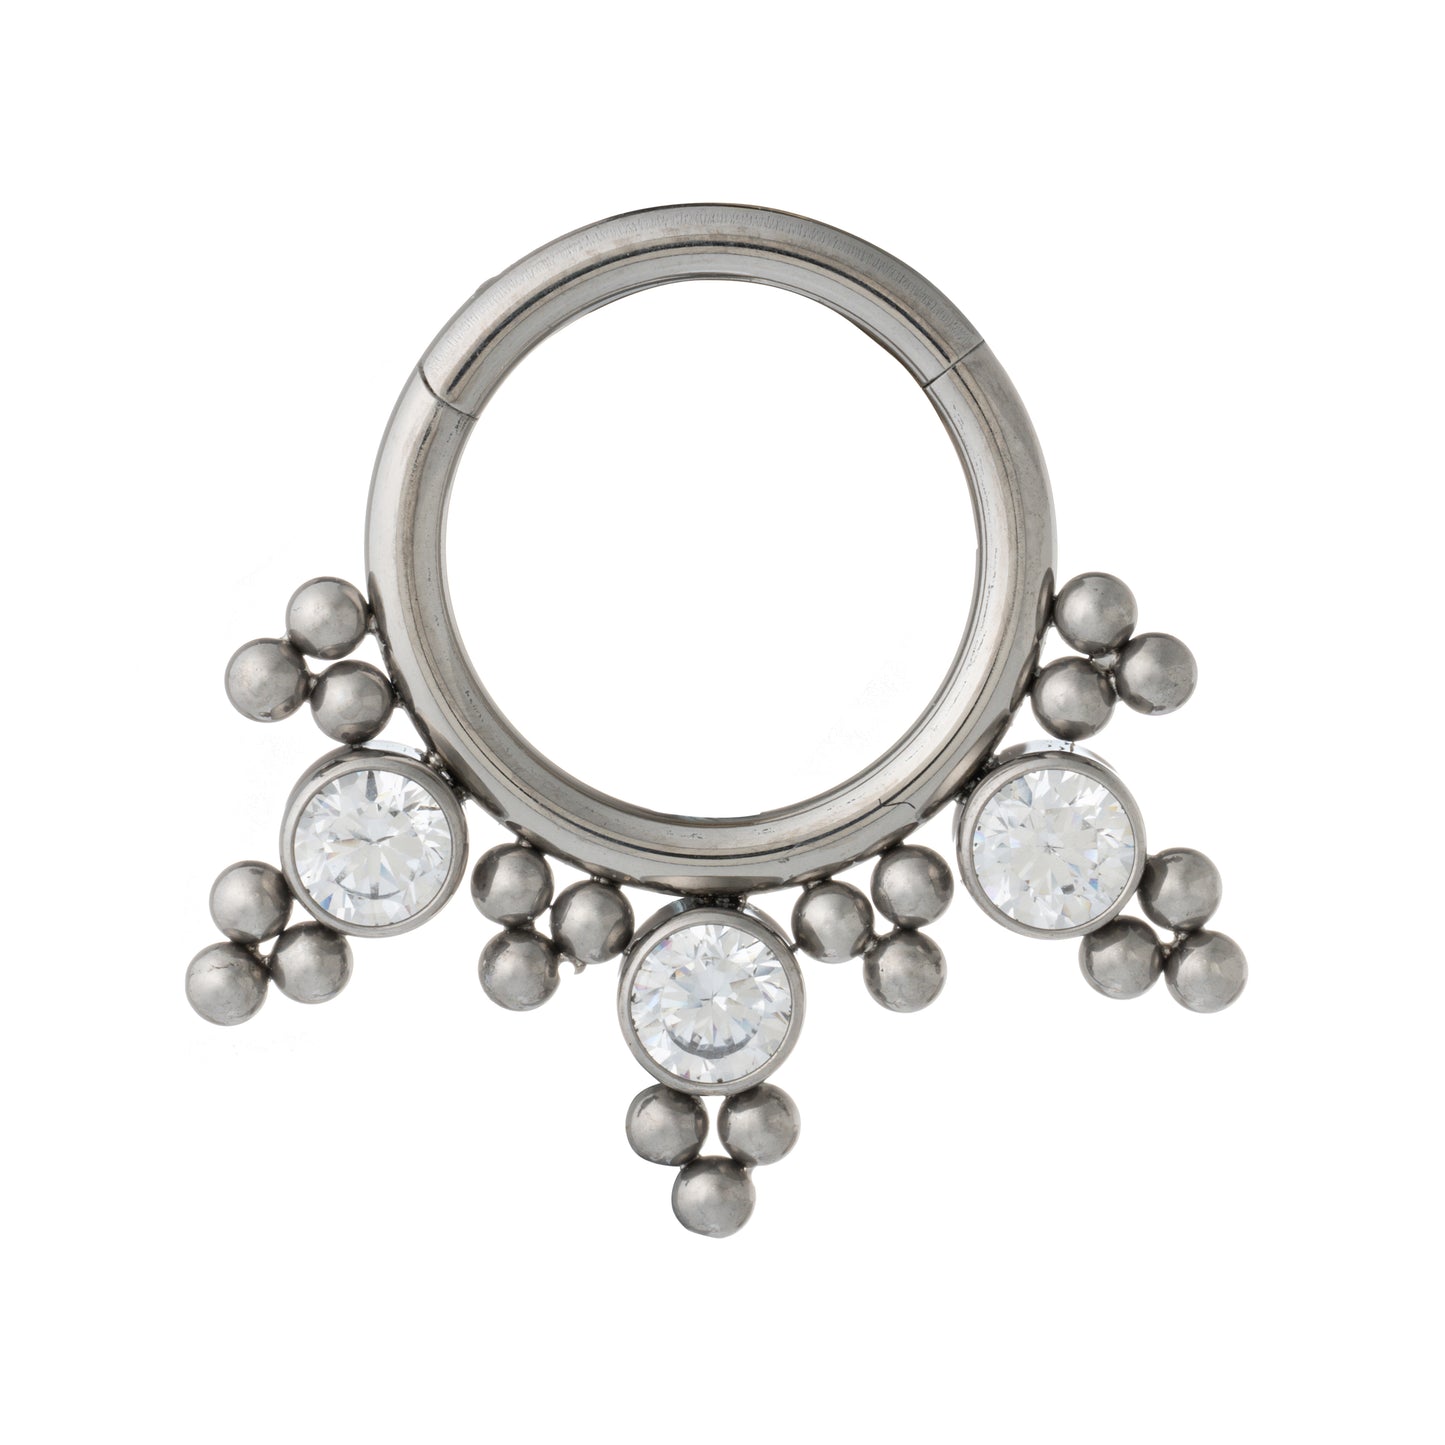 Titanium Hinged Segment Ring With 3 Blaze CZ Stones & Beads